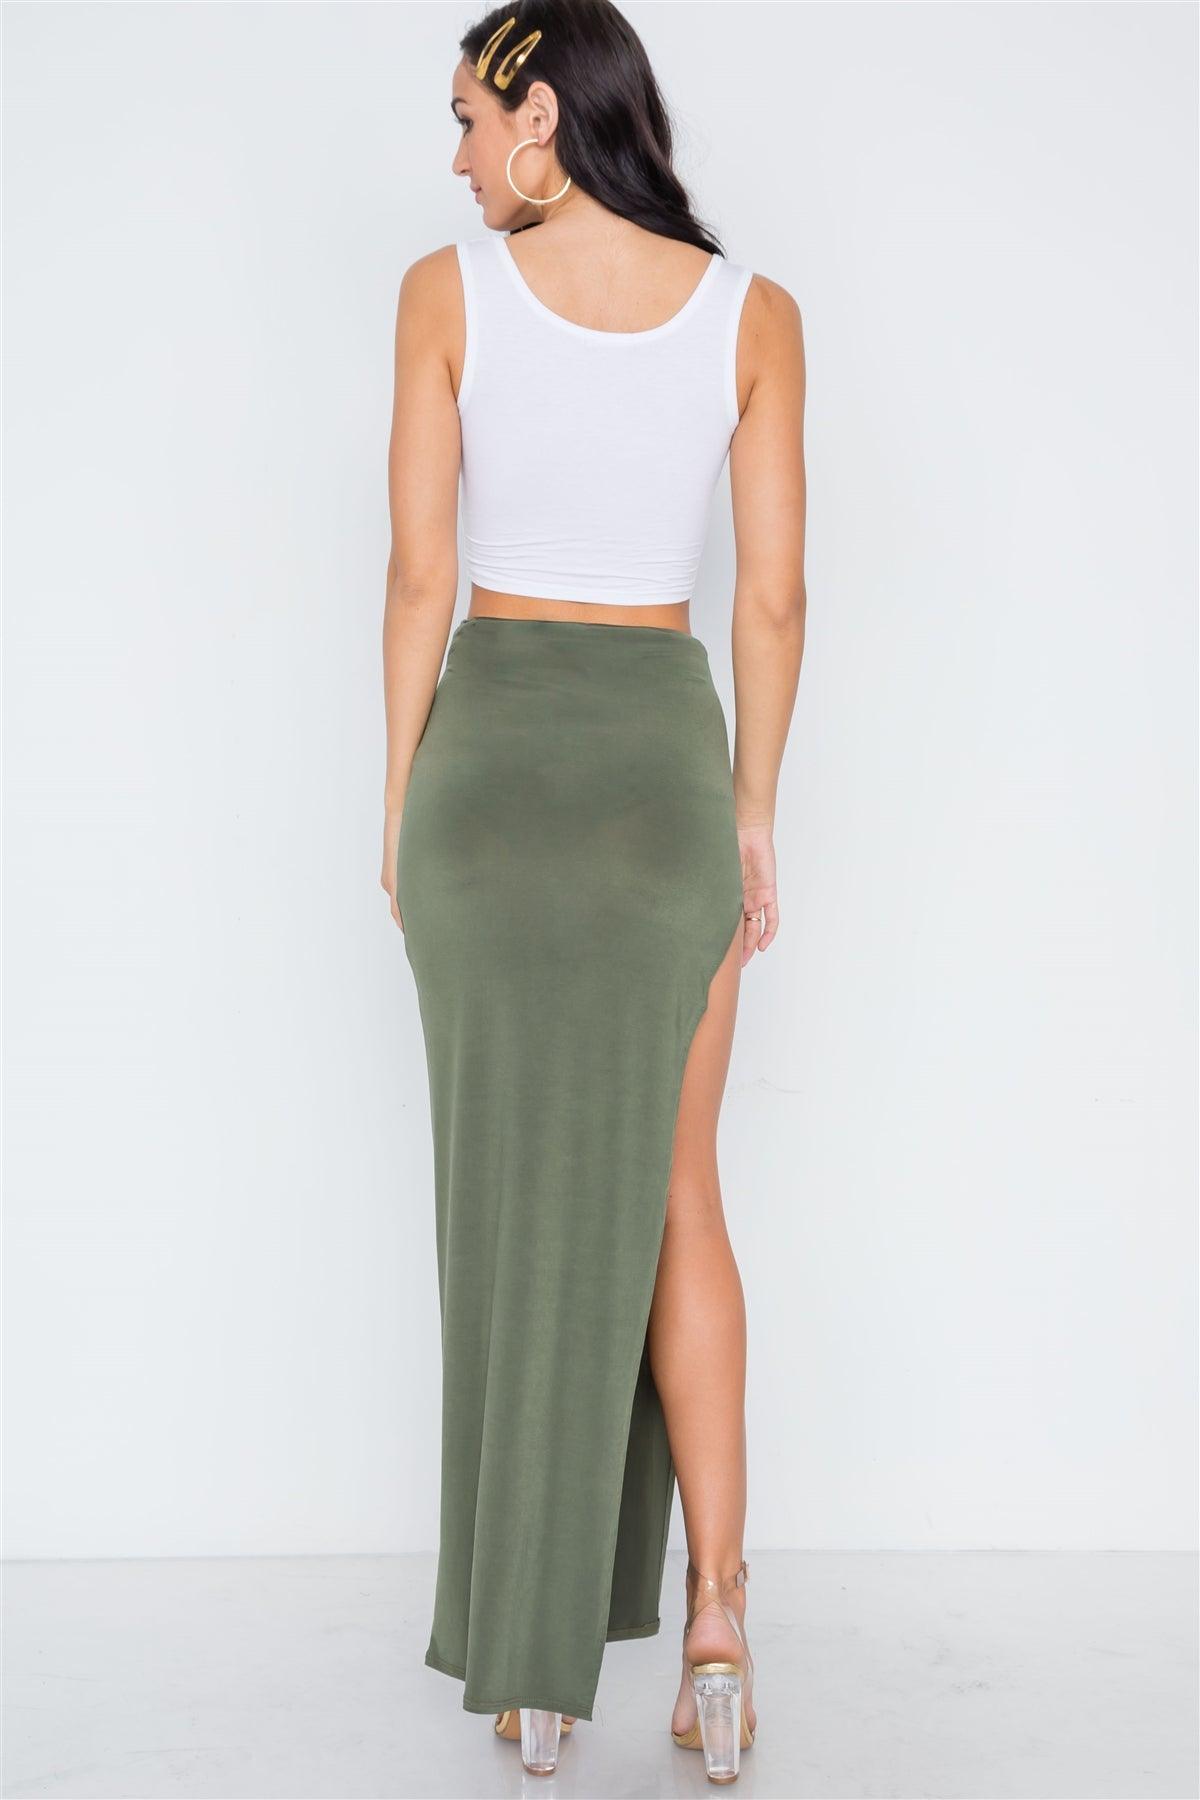 Olive Side Slit Bodycon Maxi Skirt /2-2-1